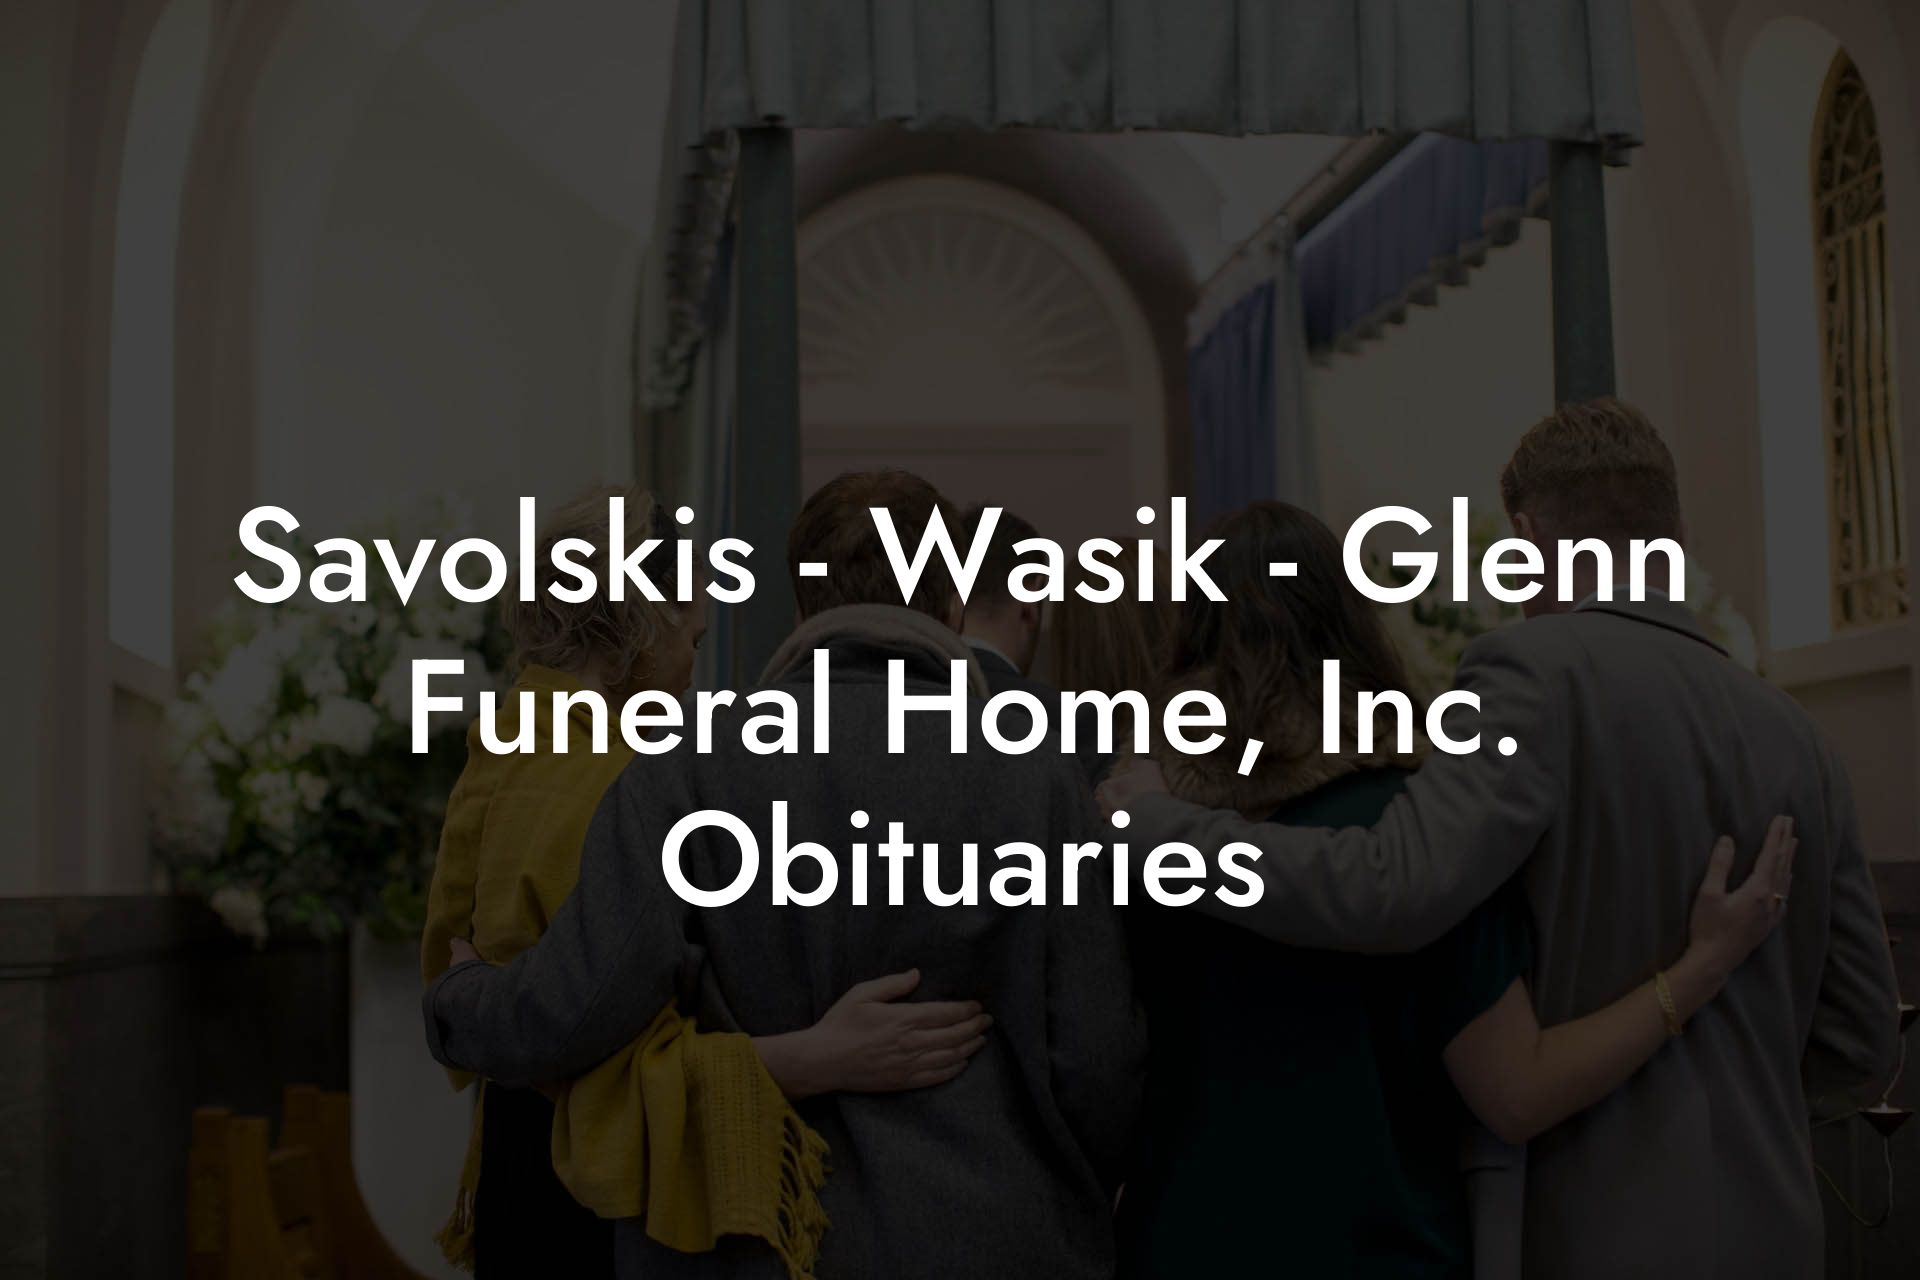 Savolskis - Wasik - Glenn Funeral Home, Inc. Obituaries